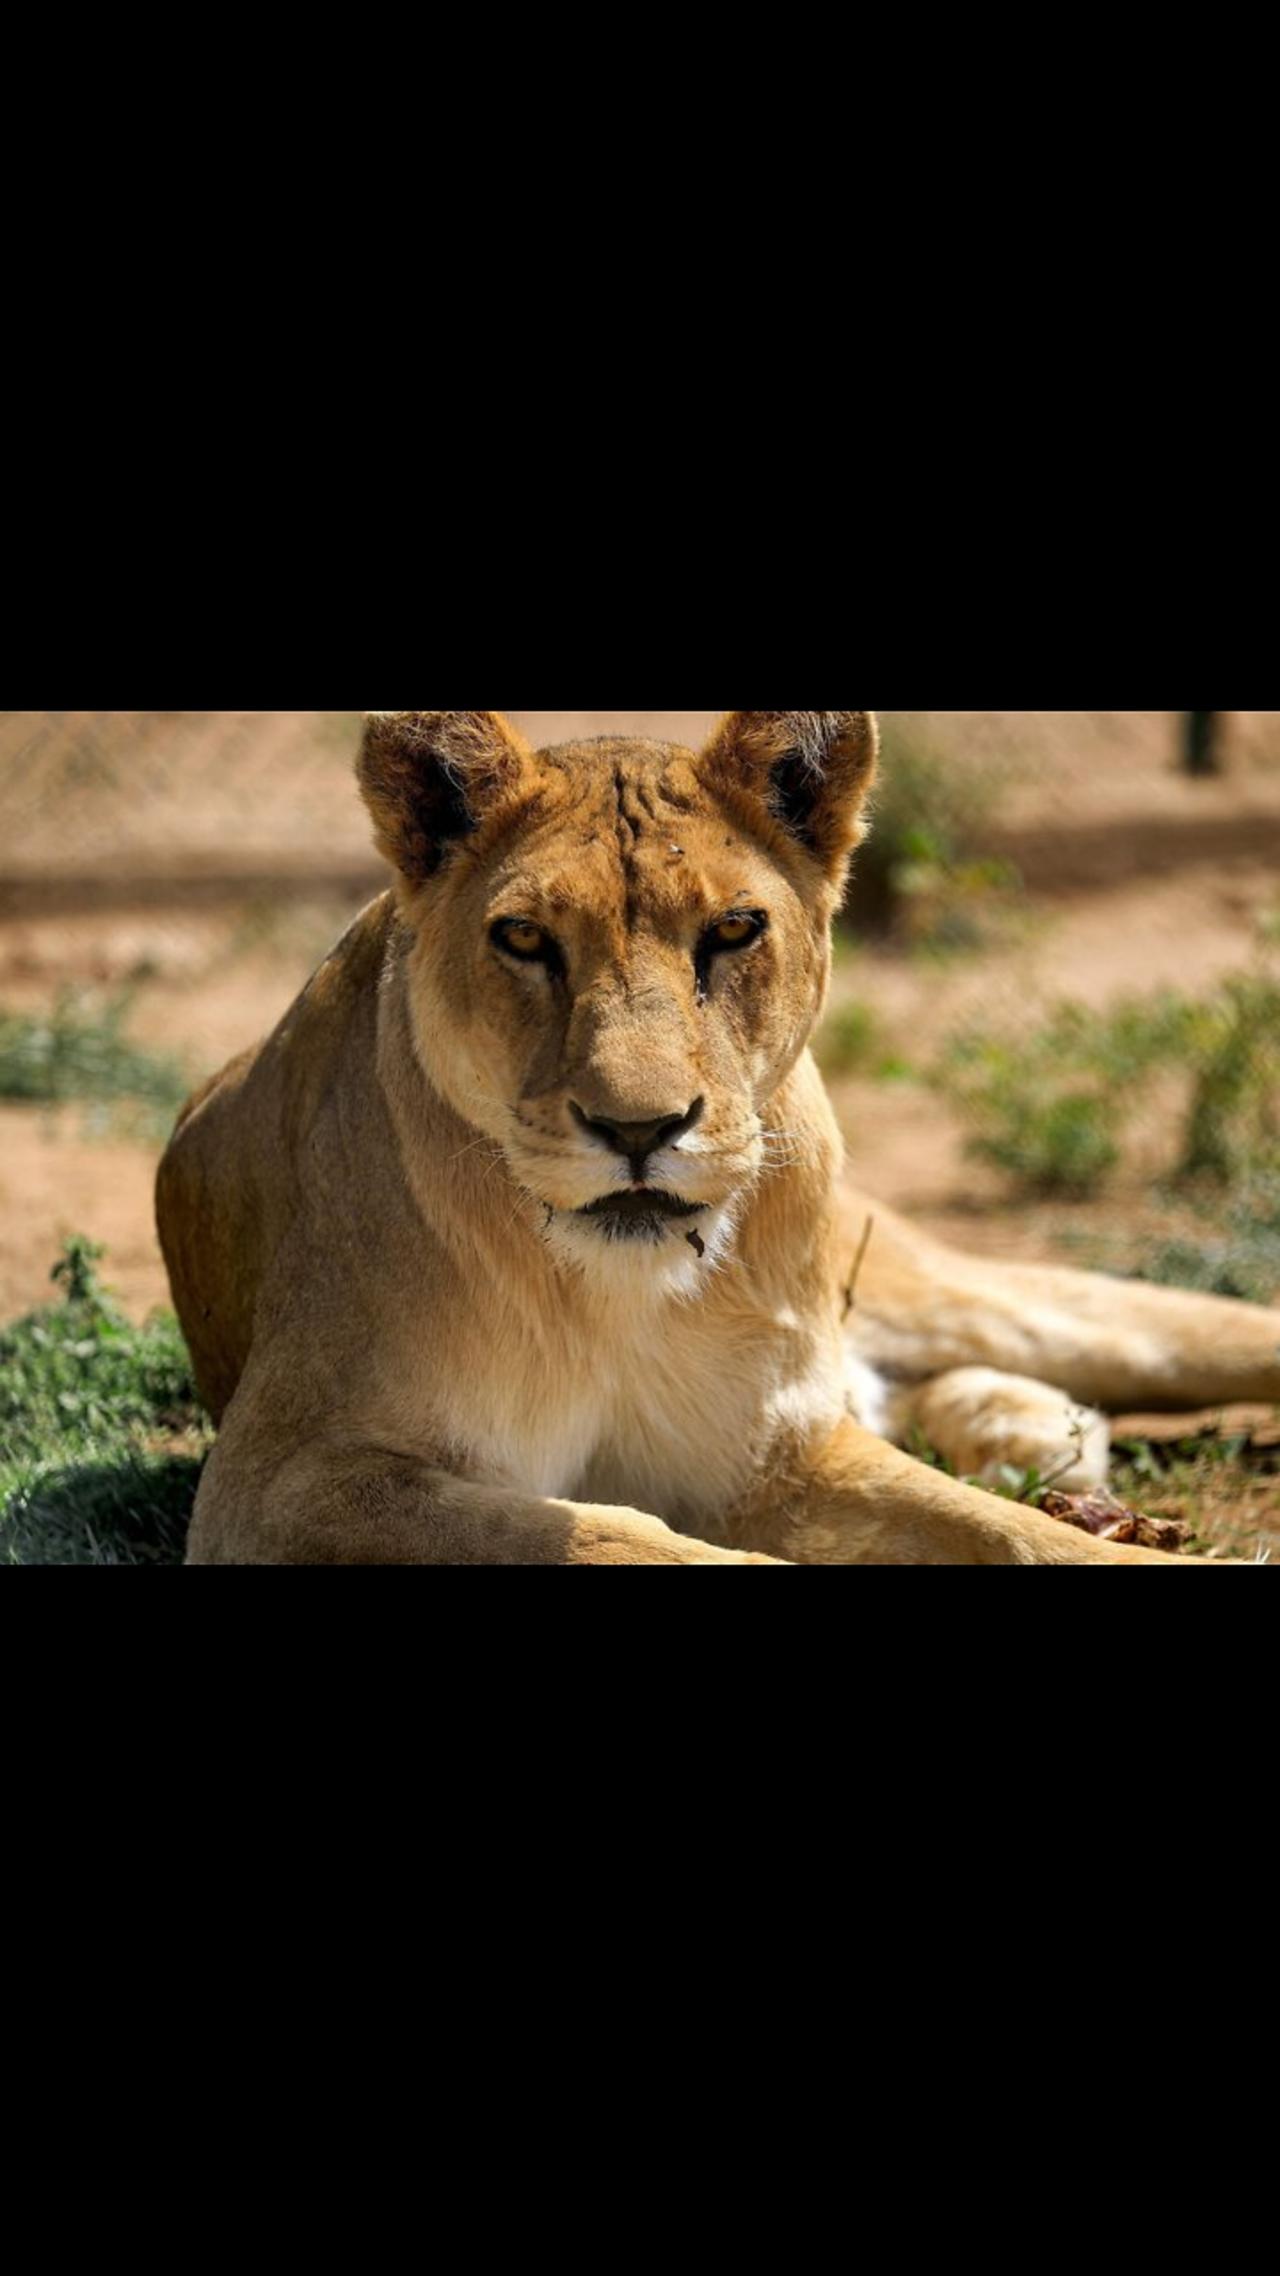 ONE HOUR of Amazing Animal Moments | lion king | wildanimalsplanet